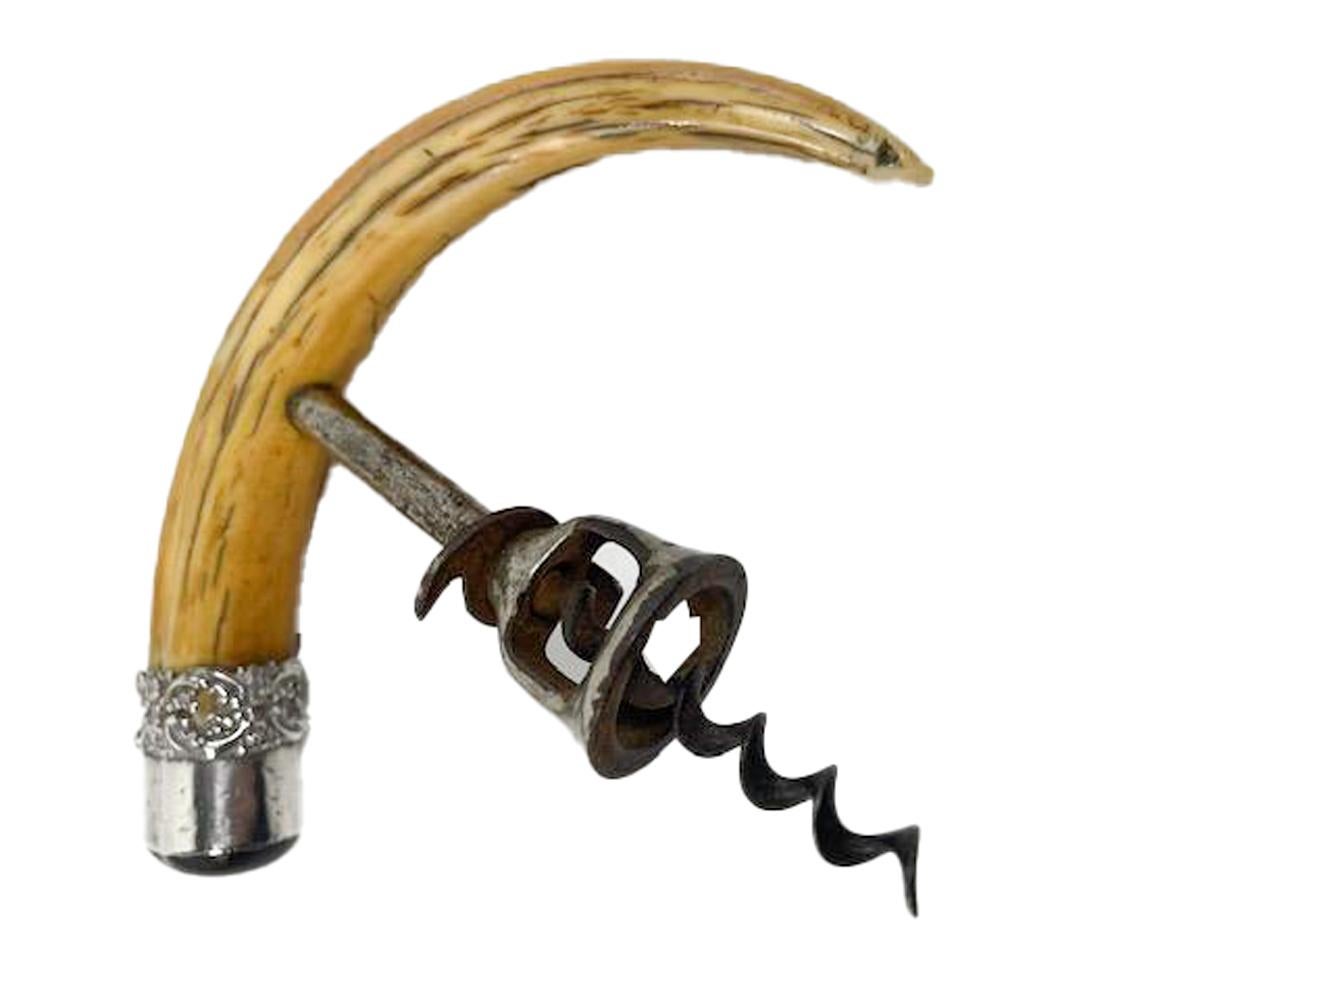 Silver Mounted Boar's Tusk Corkscrew Marked 